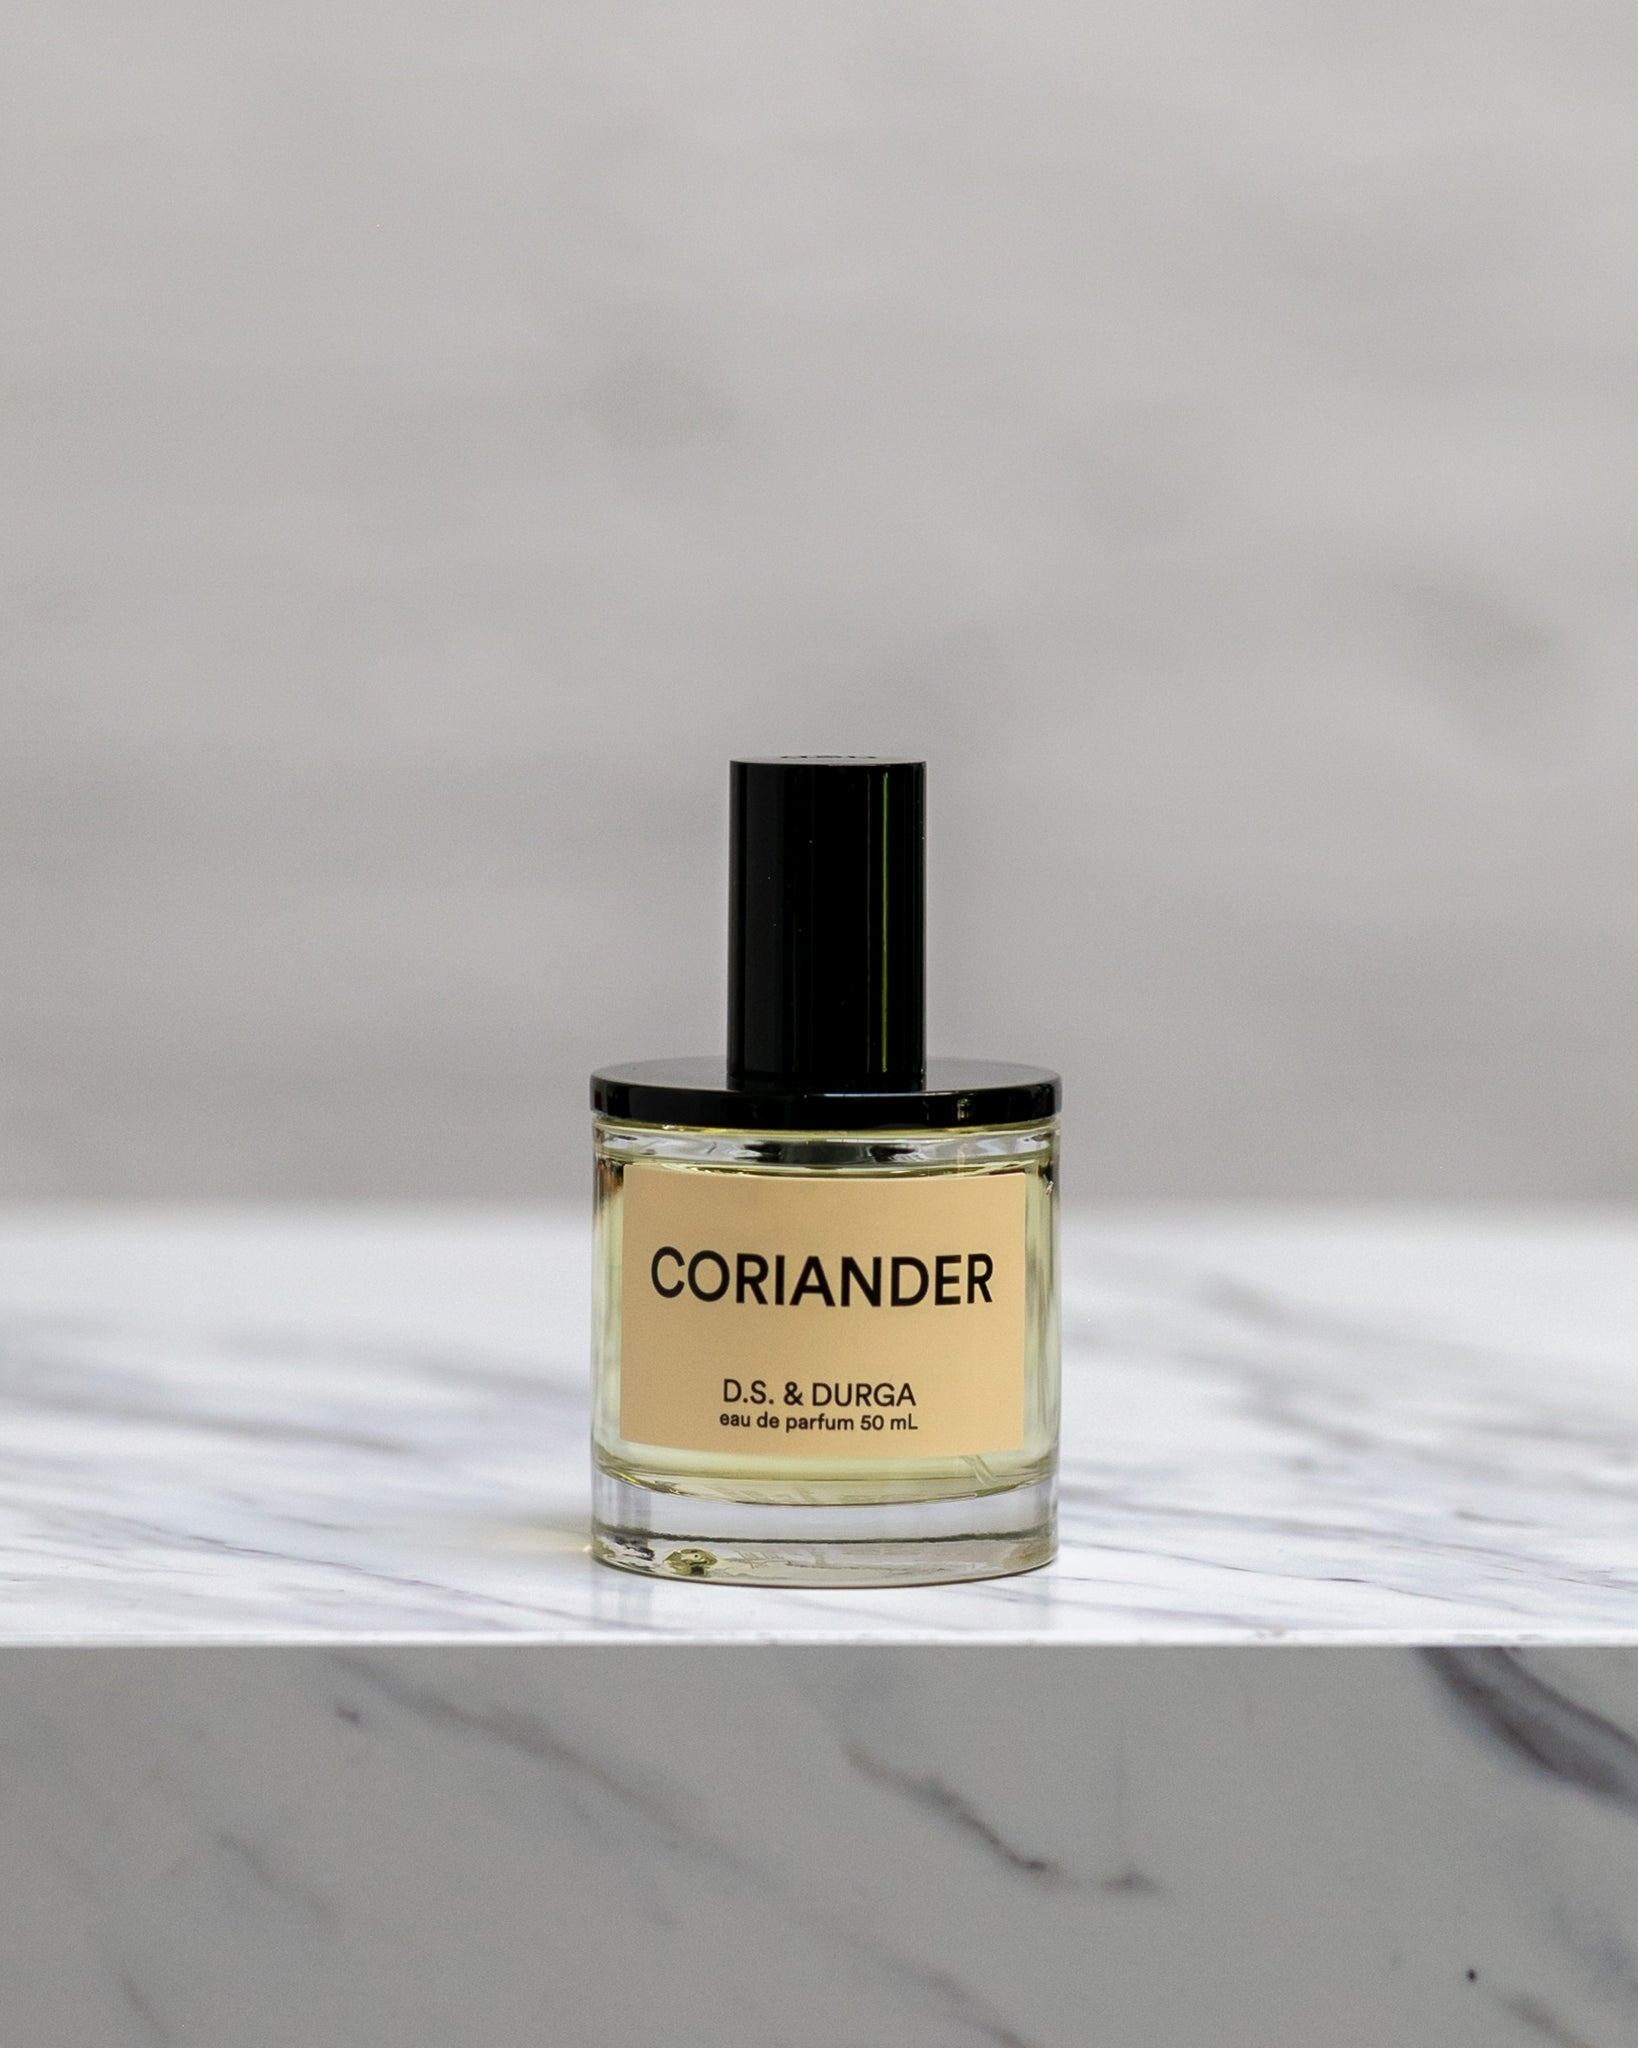 D.S. & Durga Perfume, Coriander bottle